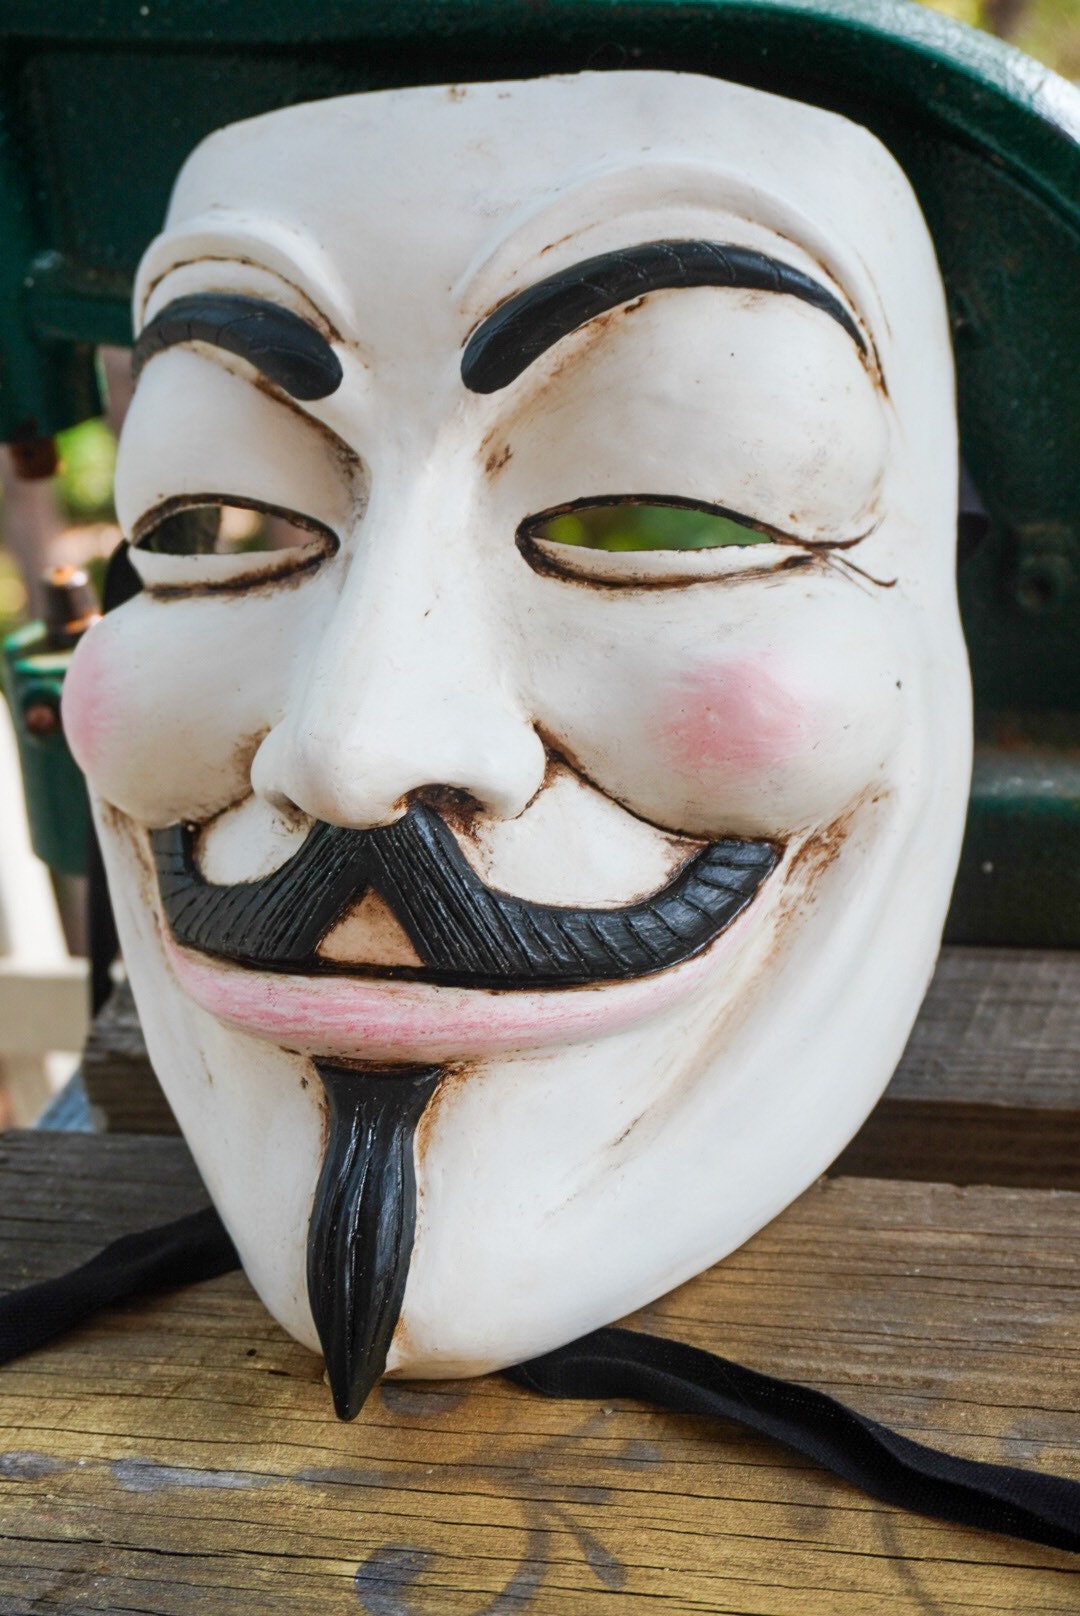 EDICIÓN LIMITADA Máscara lista - Guy Fawkes V de Venganza Máscara original Máscara de papel Máscara de resina Mejor modelo V de Venganza